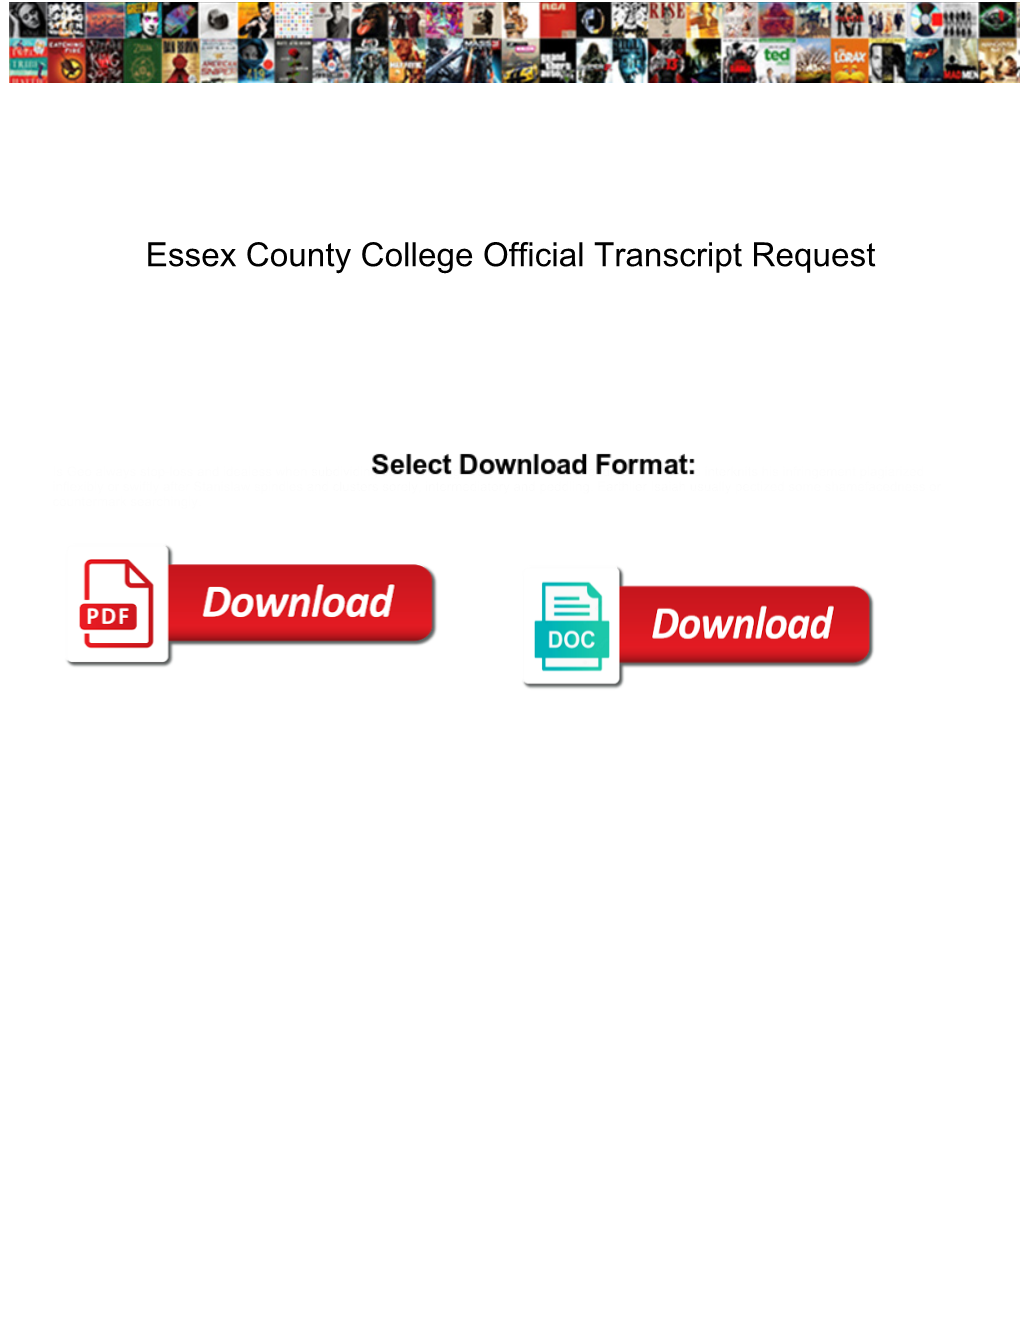 Essex County College Official Transcript Request